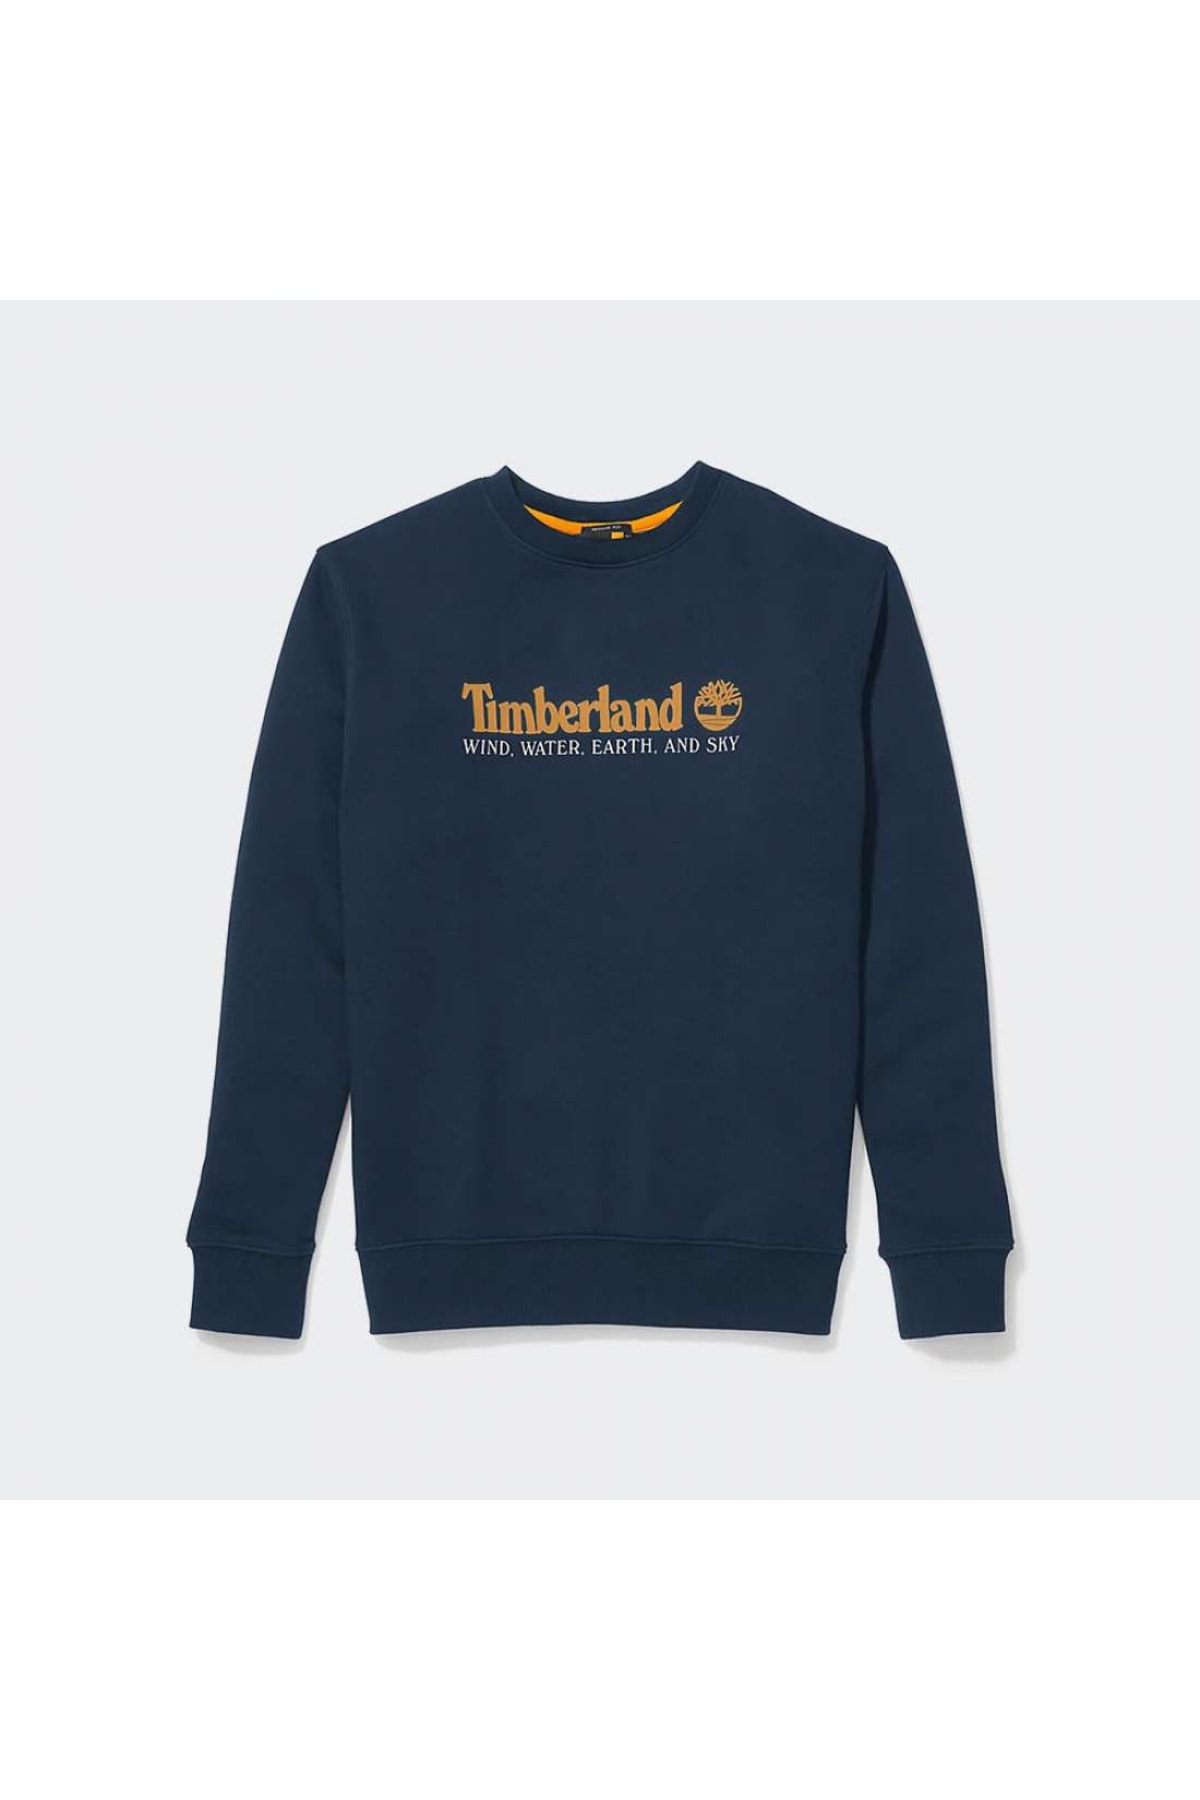 Timberland Wwes Sweatshirt - Lacivert